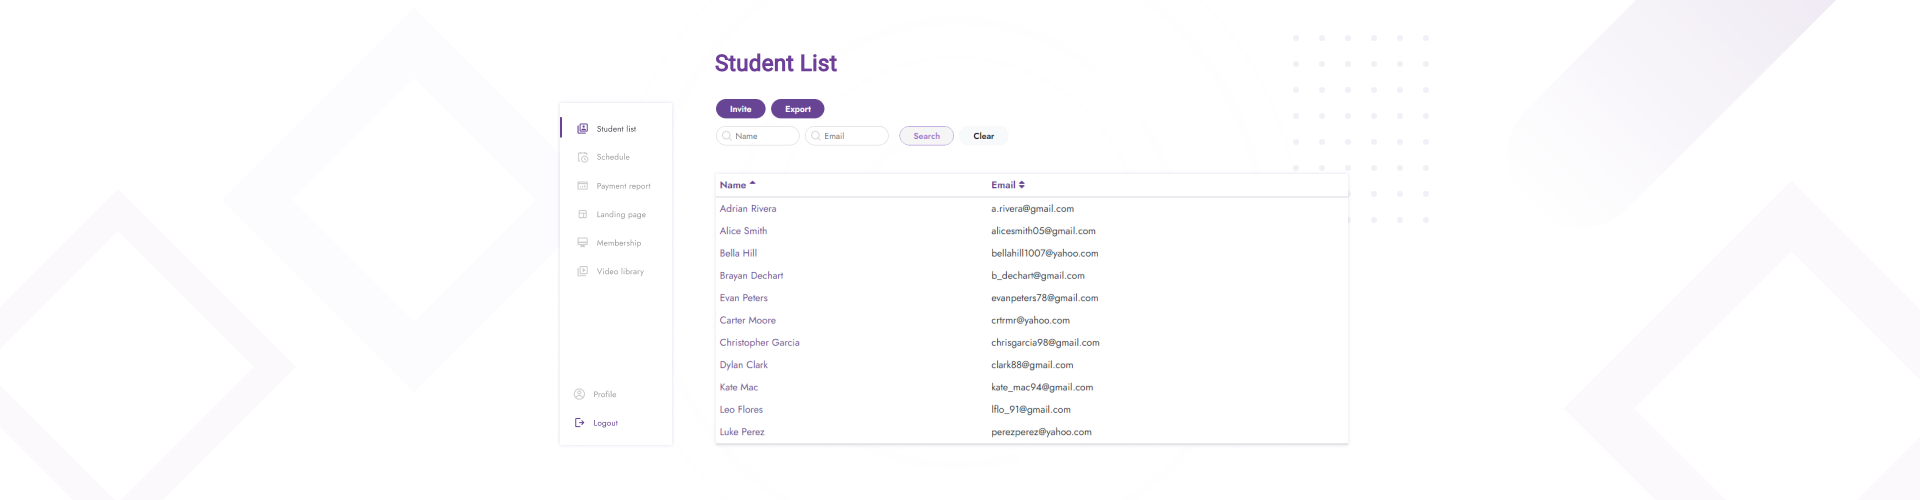 Student List